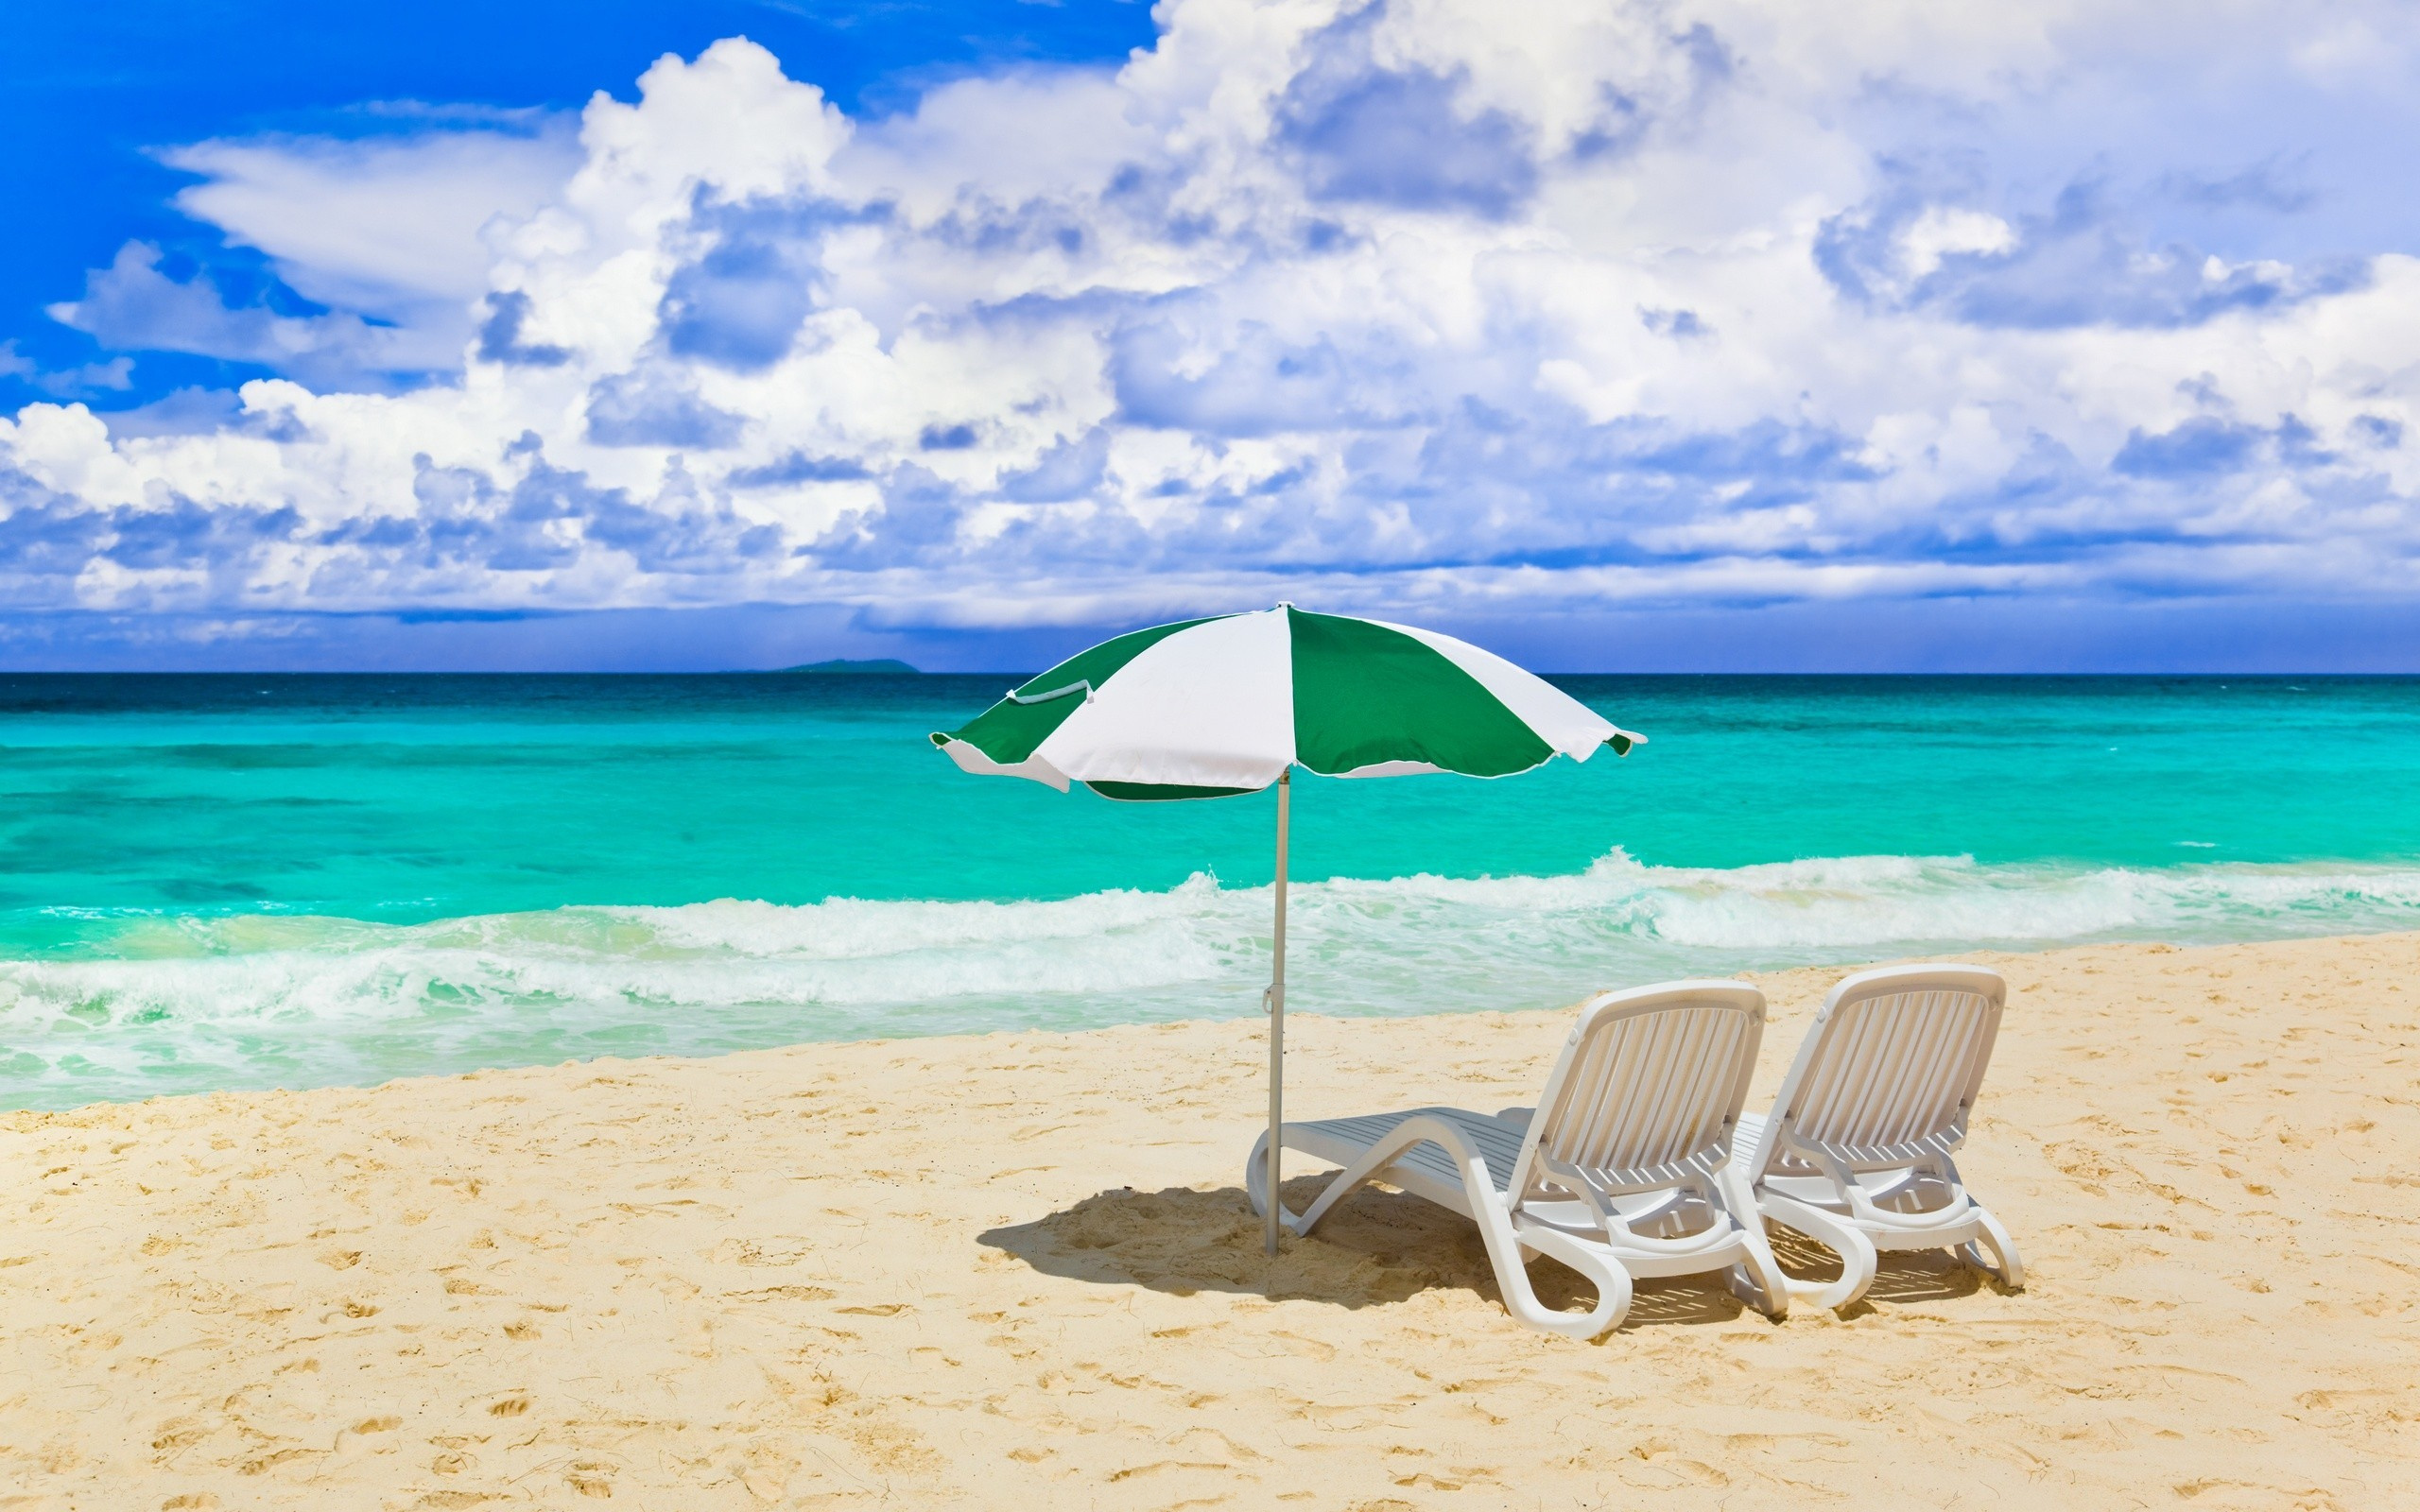 Beach Umbrella: A canopy designed to protect against rain or sunlight. 2560x1600 HD Wallpaper.